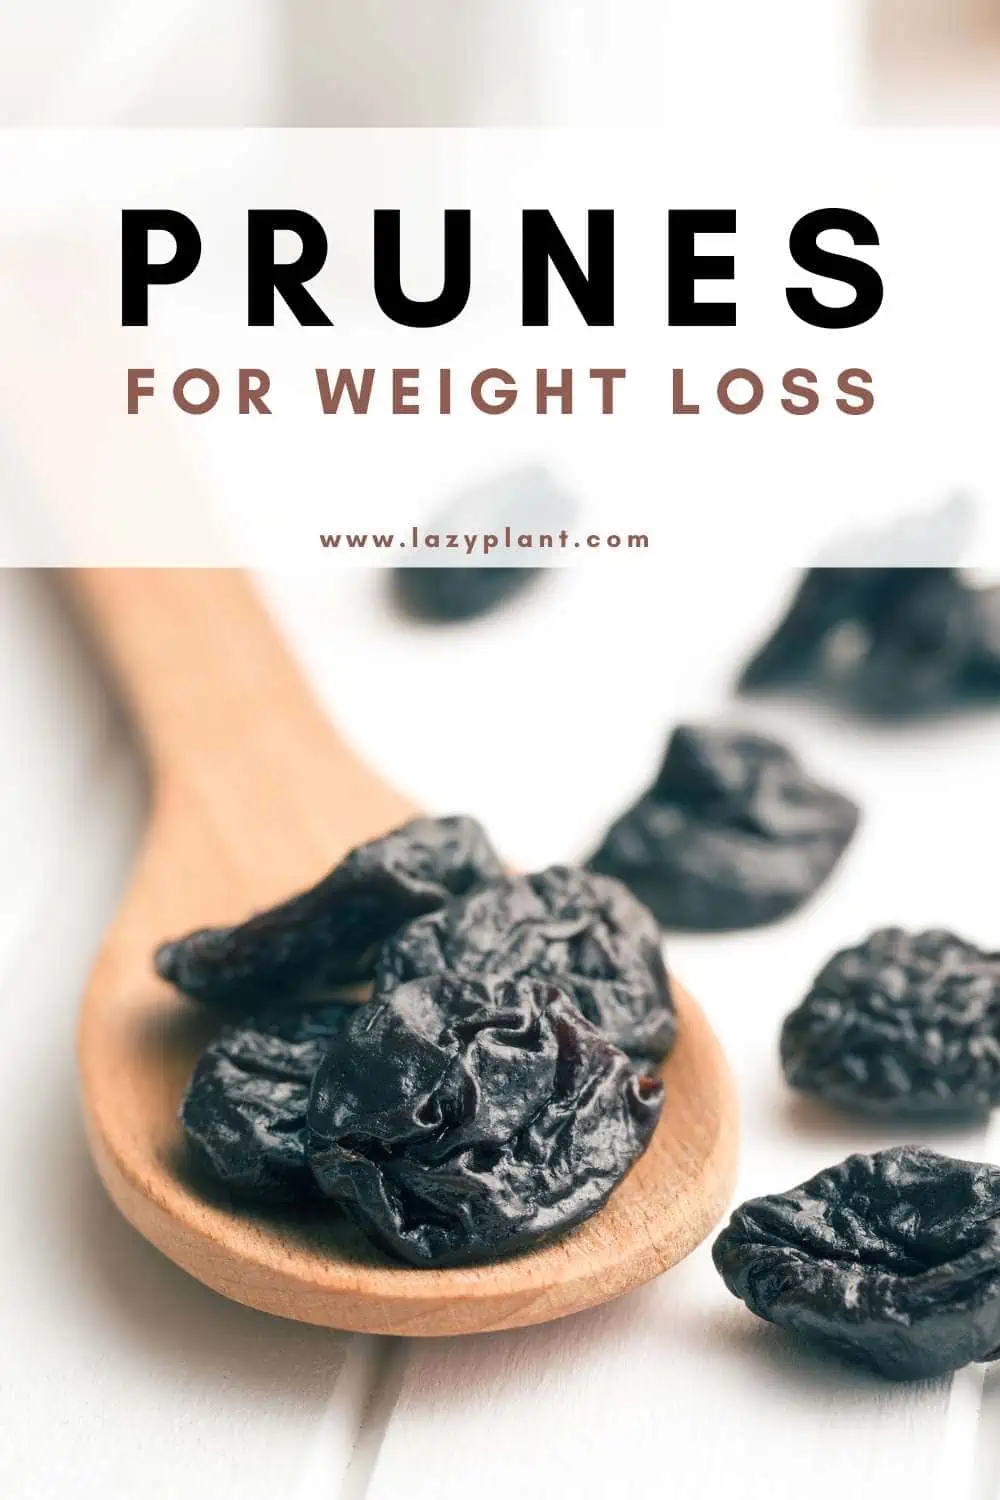 Benefits of prune & prune juice for weight loss